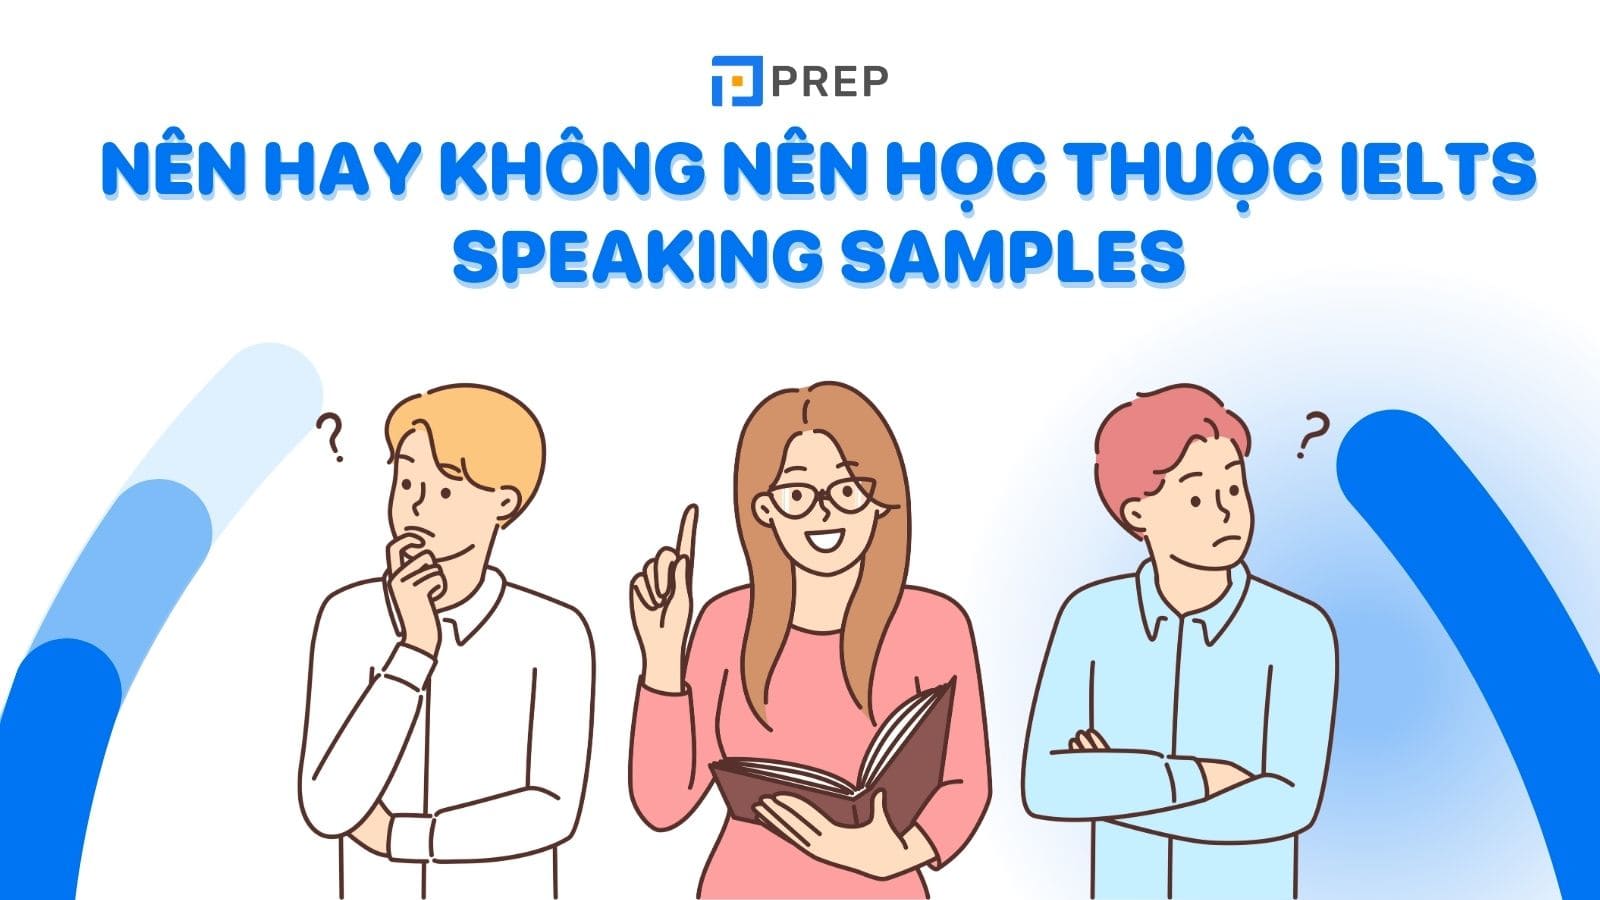 speaking-samples-co-nen-hoc-thuoc-bai-mau-speaking.jpg